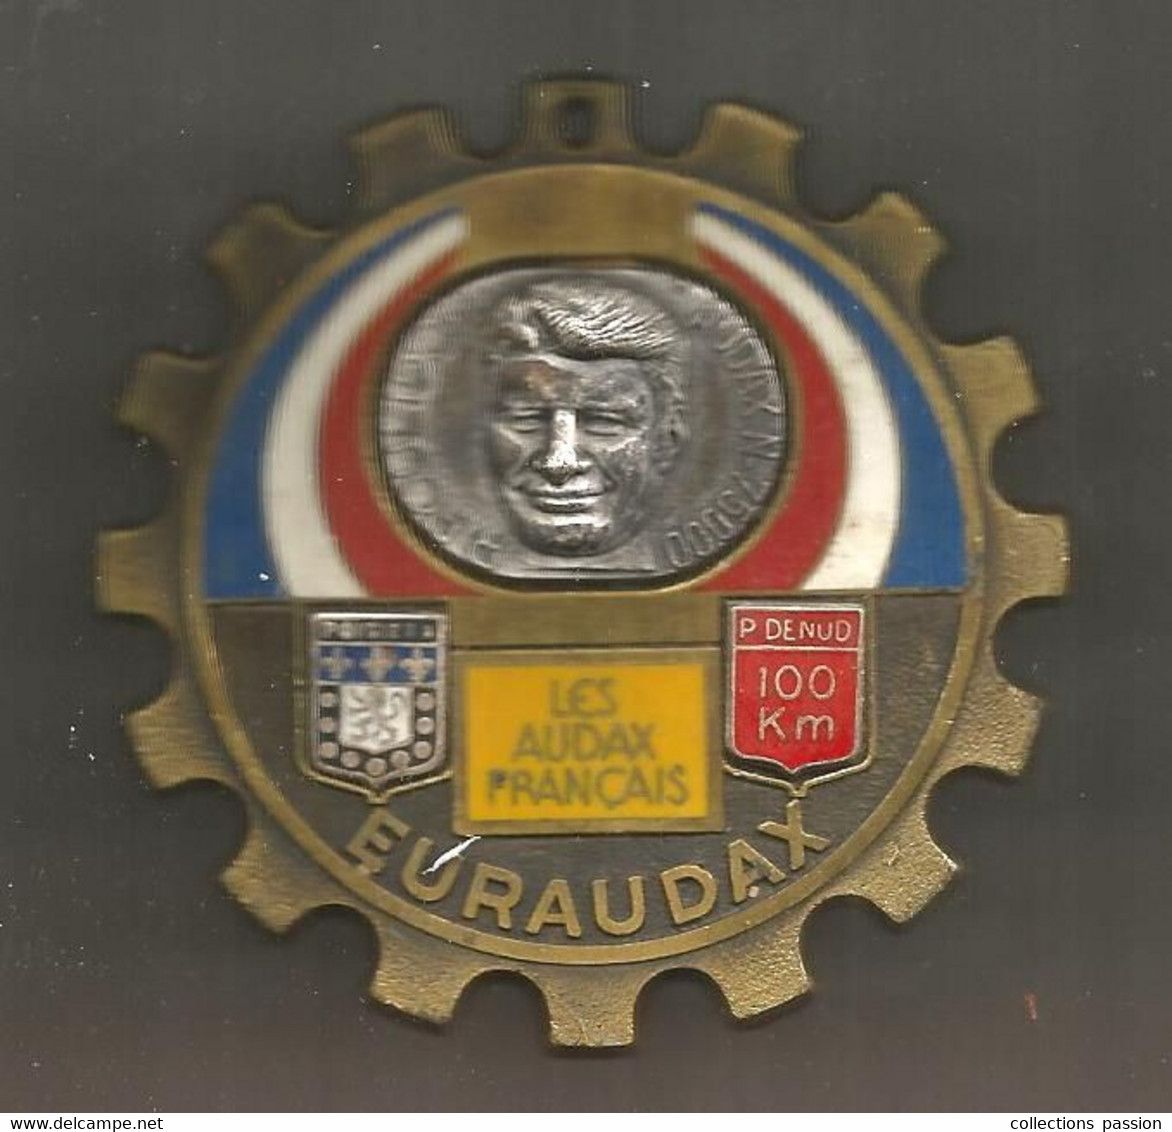 Médaille , Sports , Cyclisme, EURAUDAX , Les AUDAX FRANCAIS, R. Poulidor , 1979 , 72 Gr. , Frais Fr 3.35 - Cyclisme